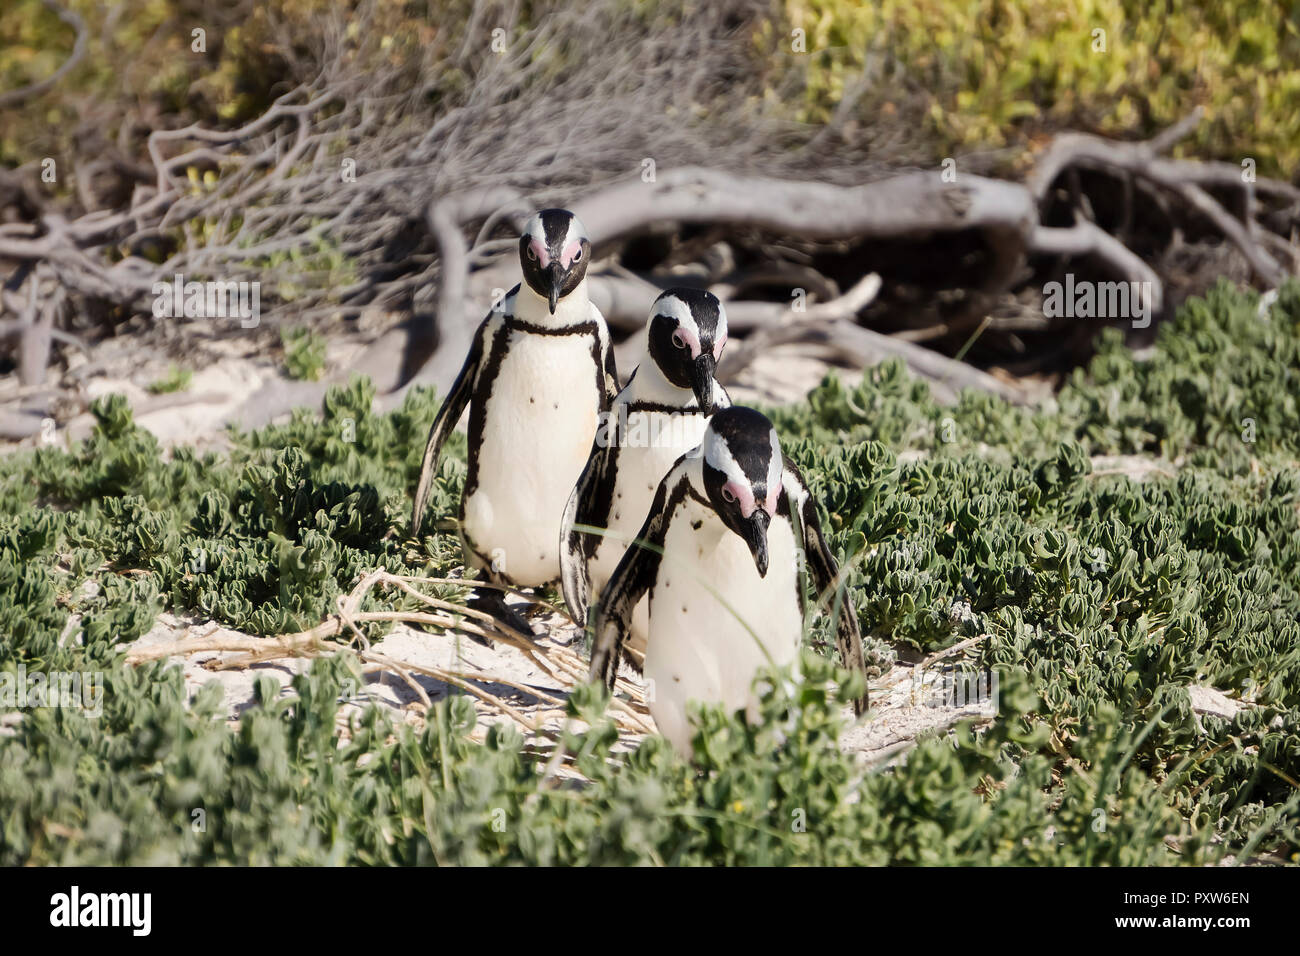 Africa, Simon's Town, Boulders Beach, Brillenpinguin, Three black-footed penguins walking, Spheniscus demersus Stock Photo